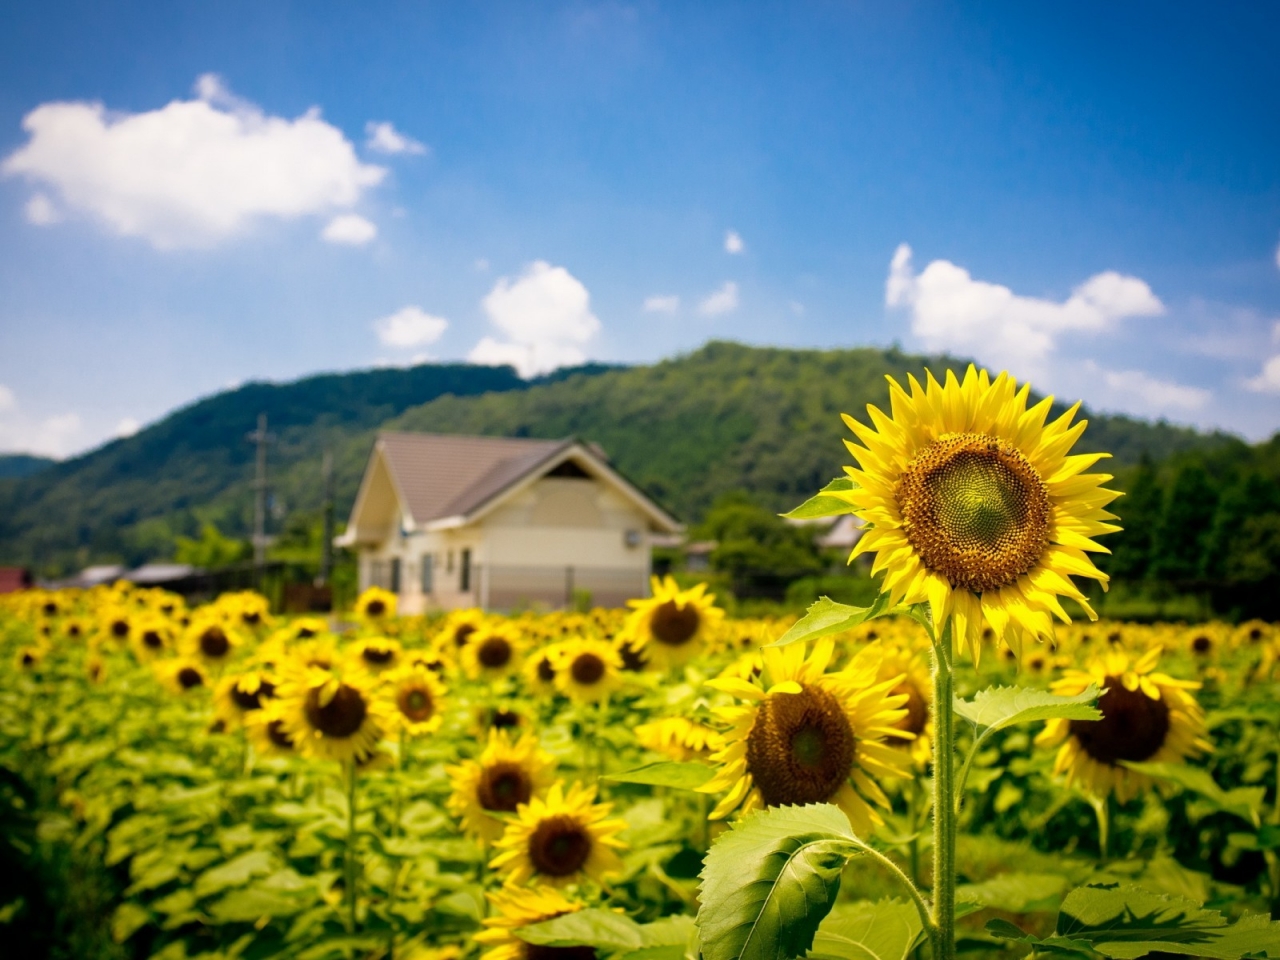 Sunflower Land for 1280 x 960 resolution